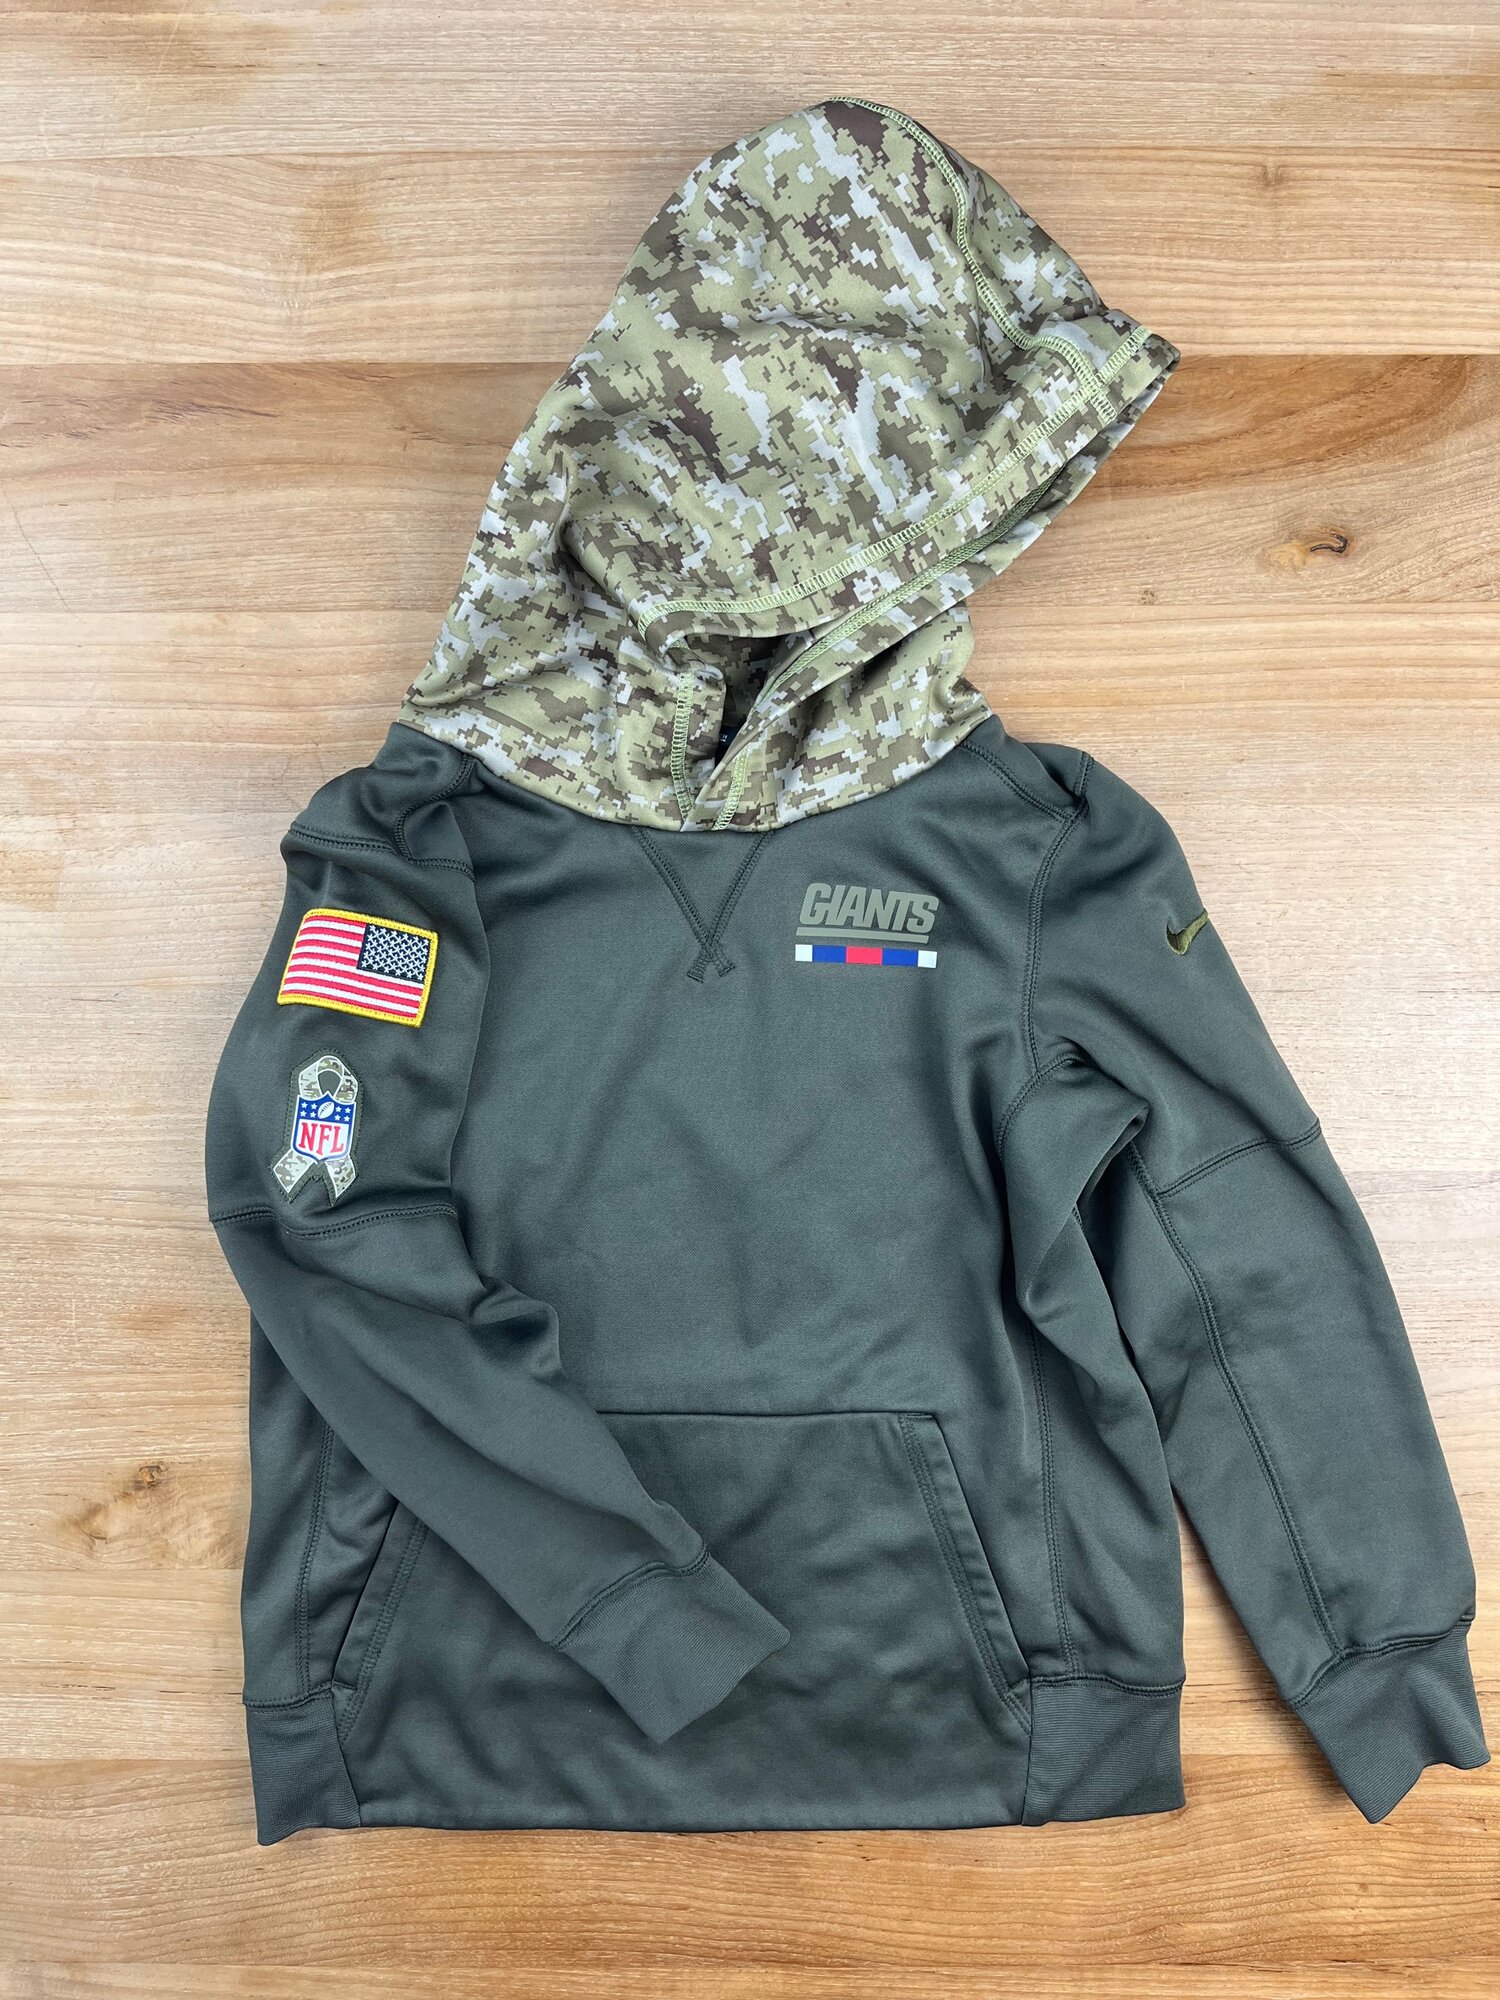 salute to service patriots hoodie